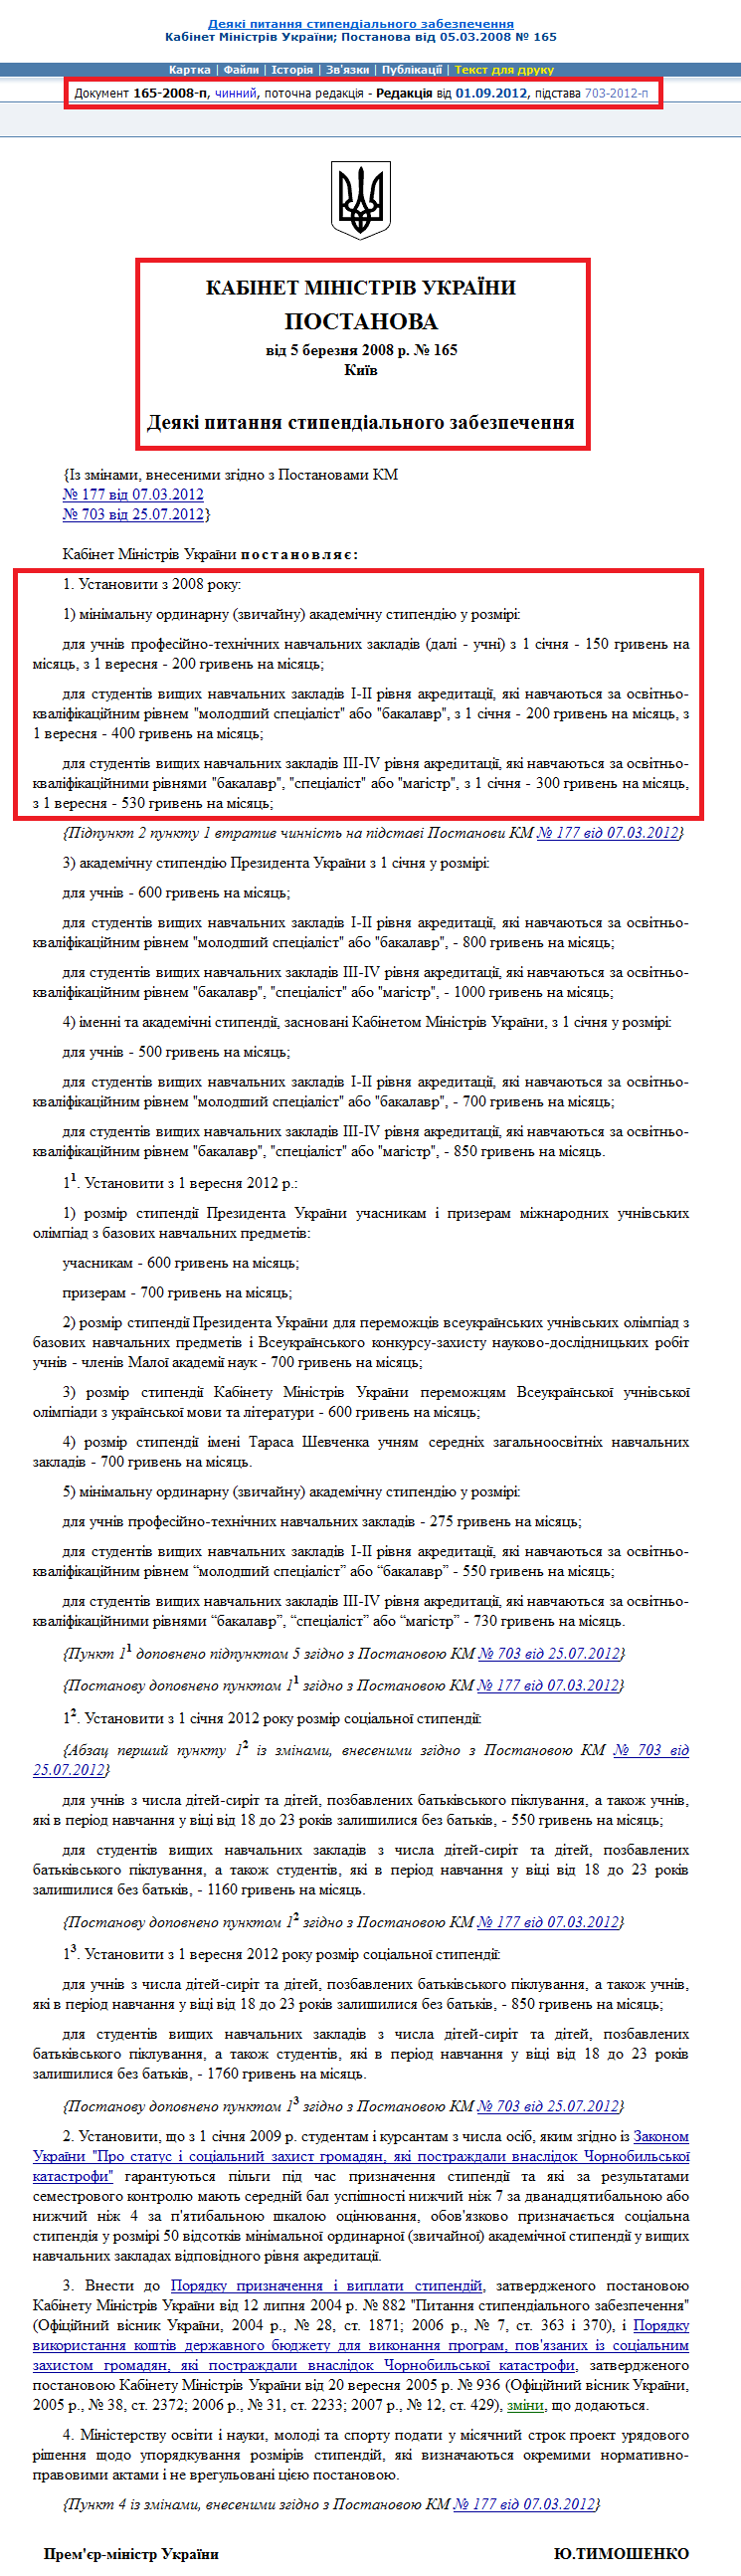 http://zakon1.rada.gov.ua/laws/show/165-2008-%D0%BF/ed20080305